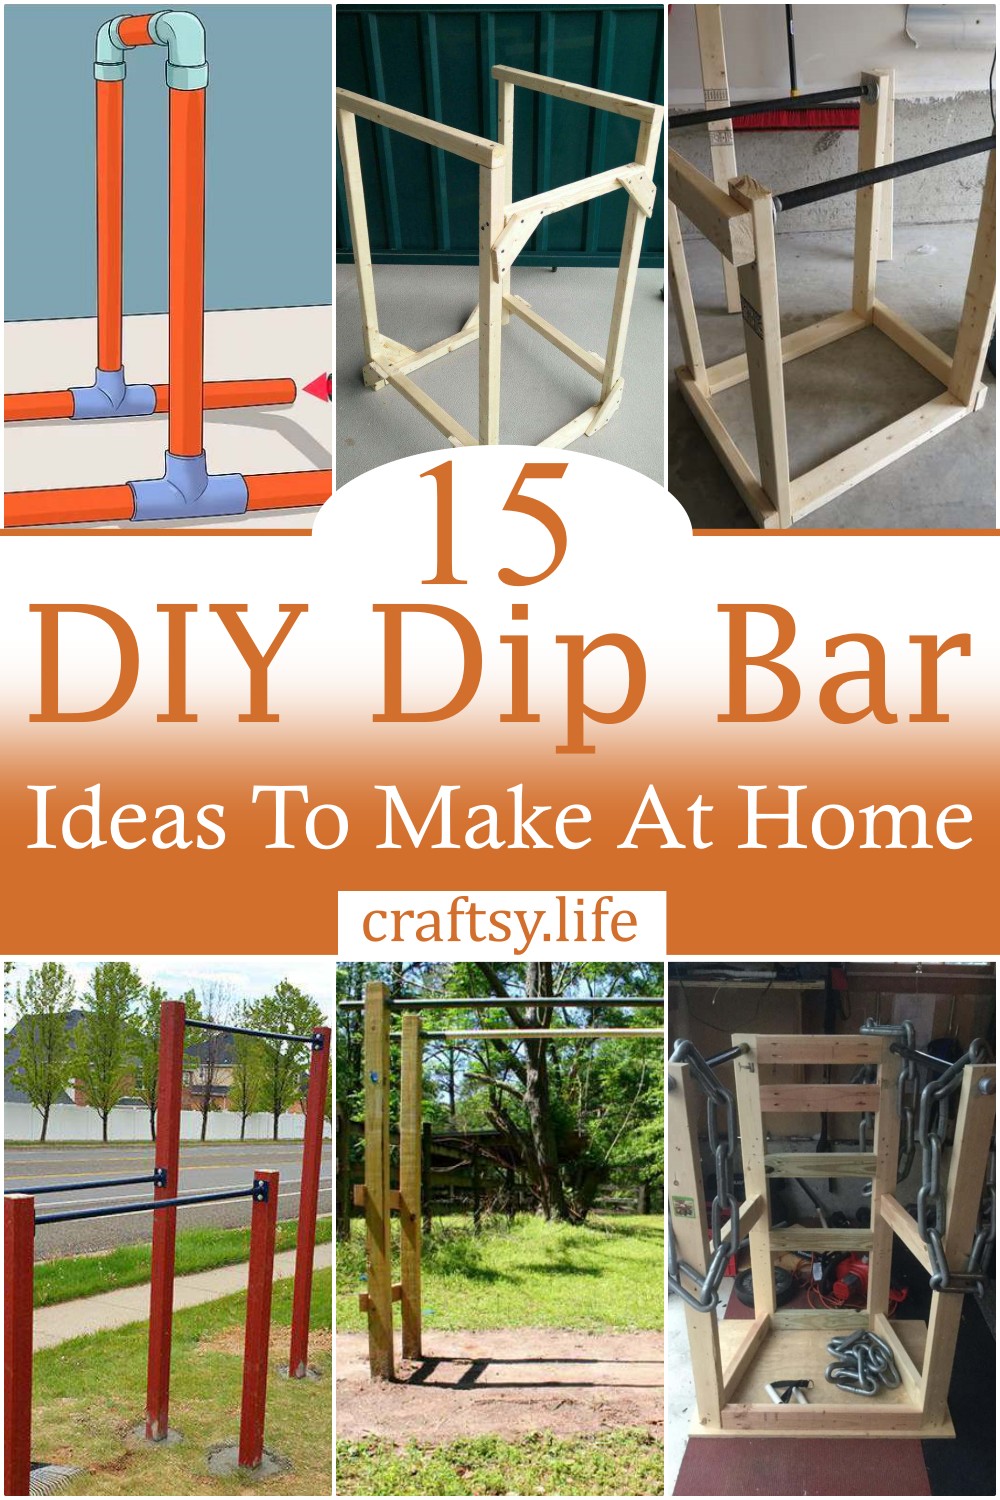 DIY Dip Bar Ideas